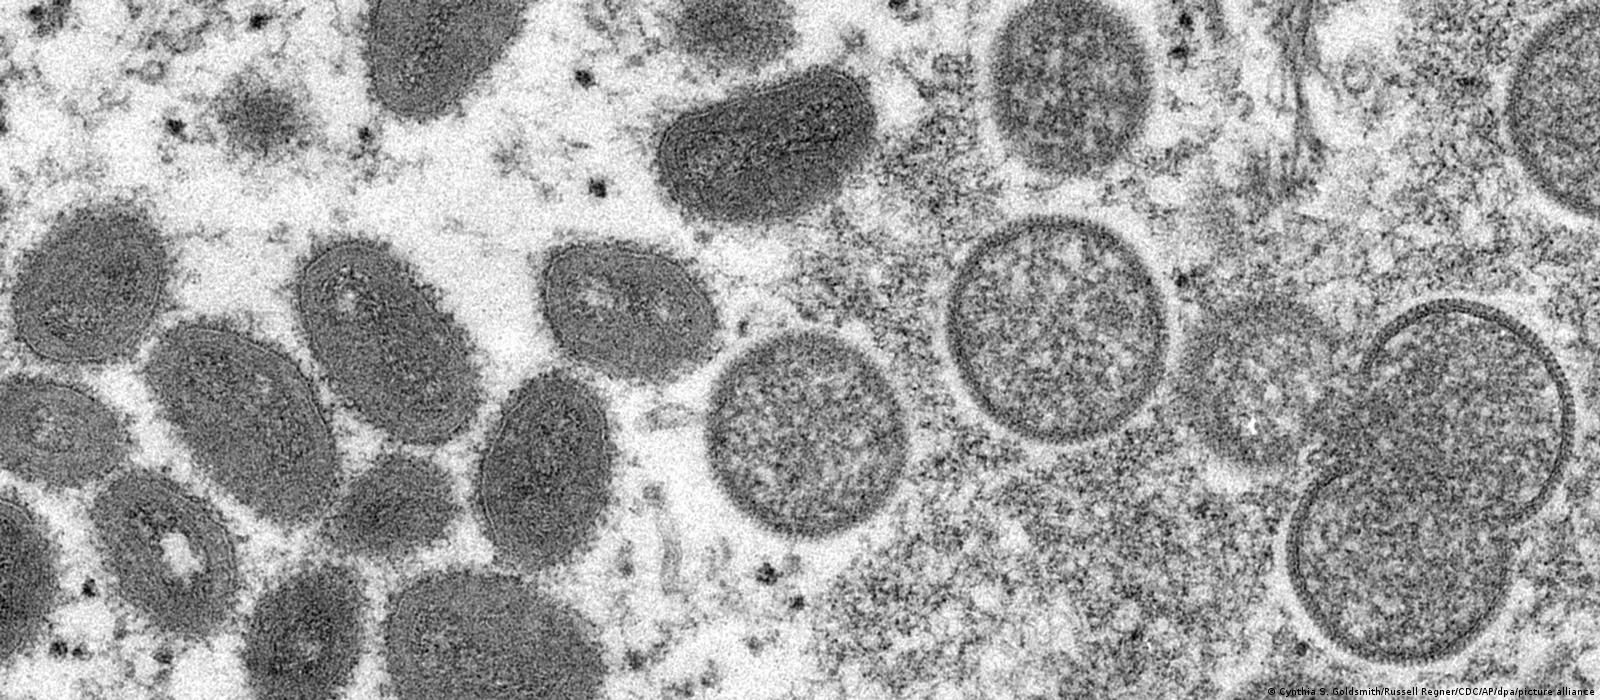 Virus vistos em microscópio